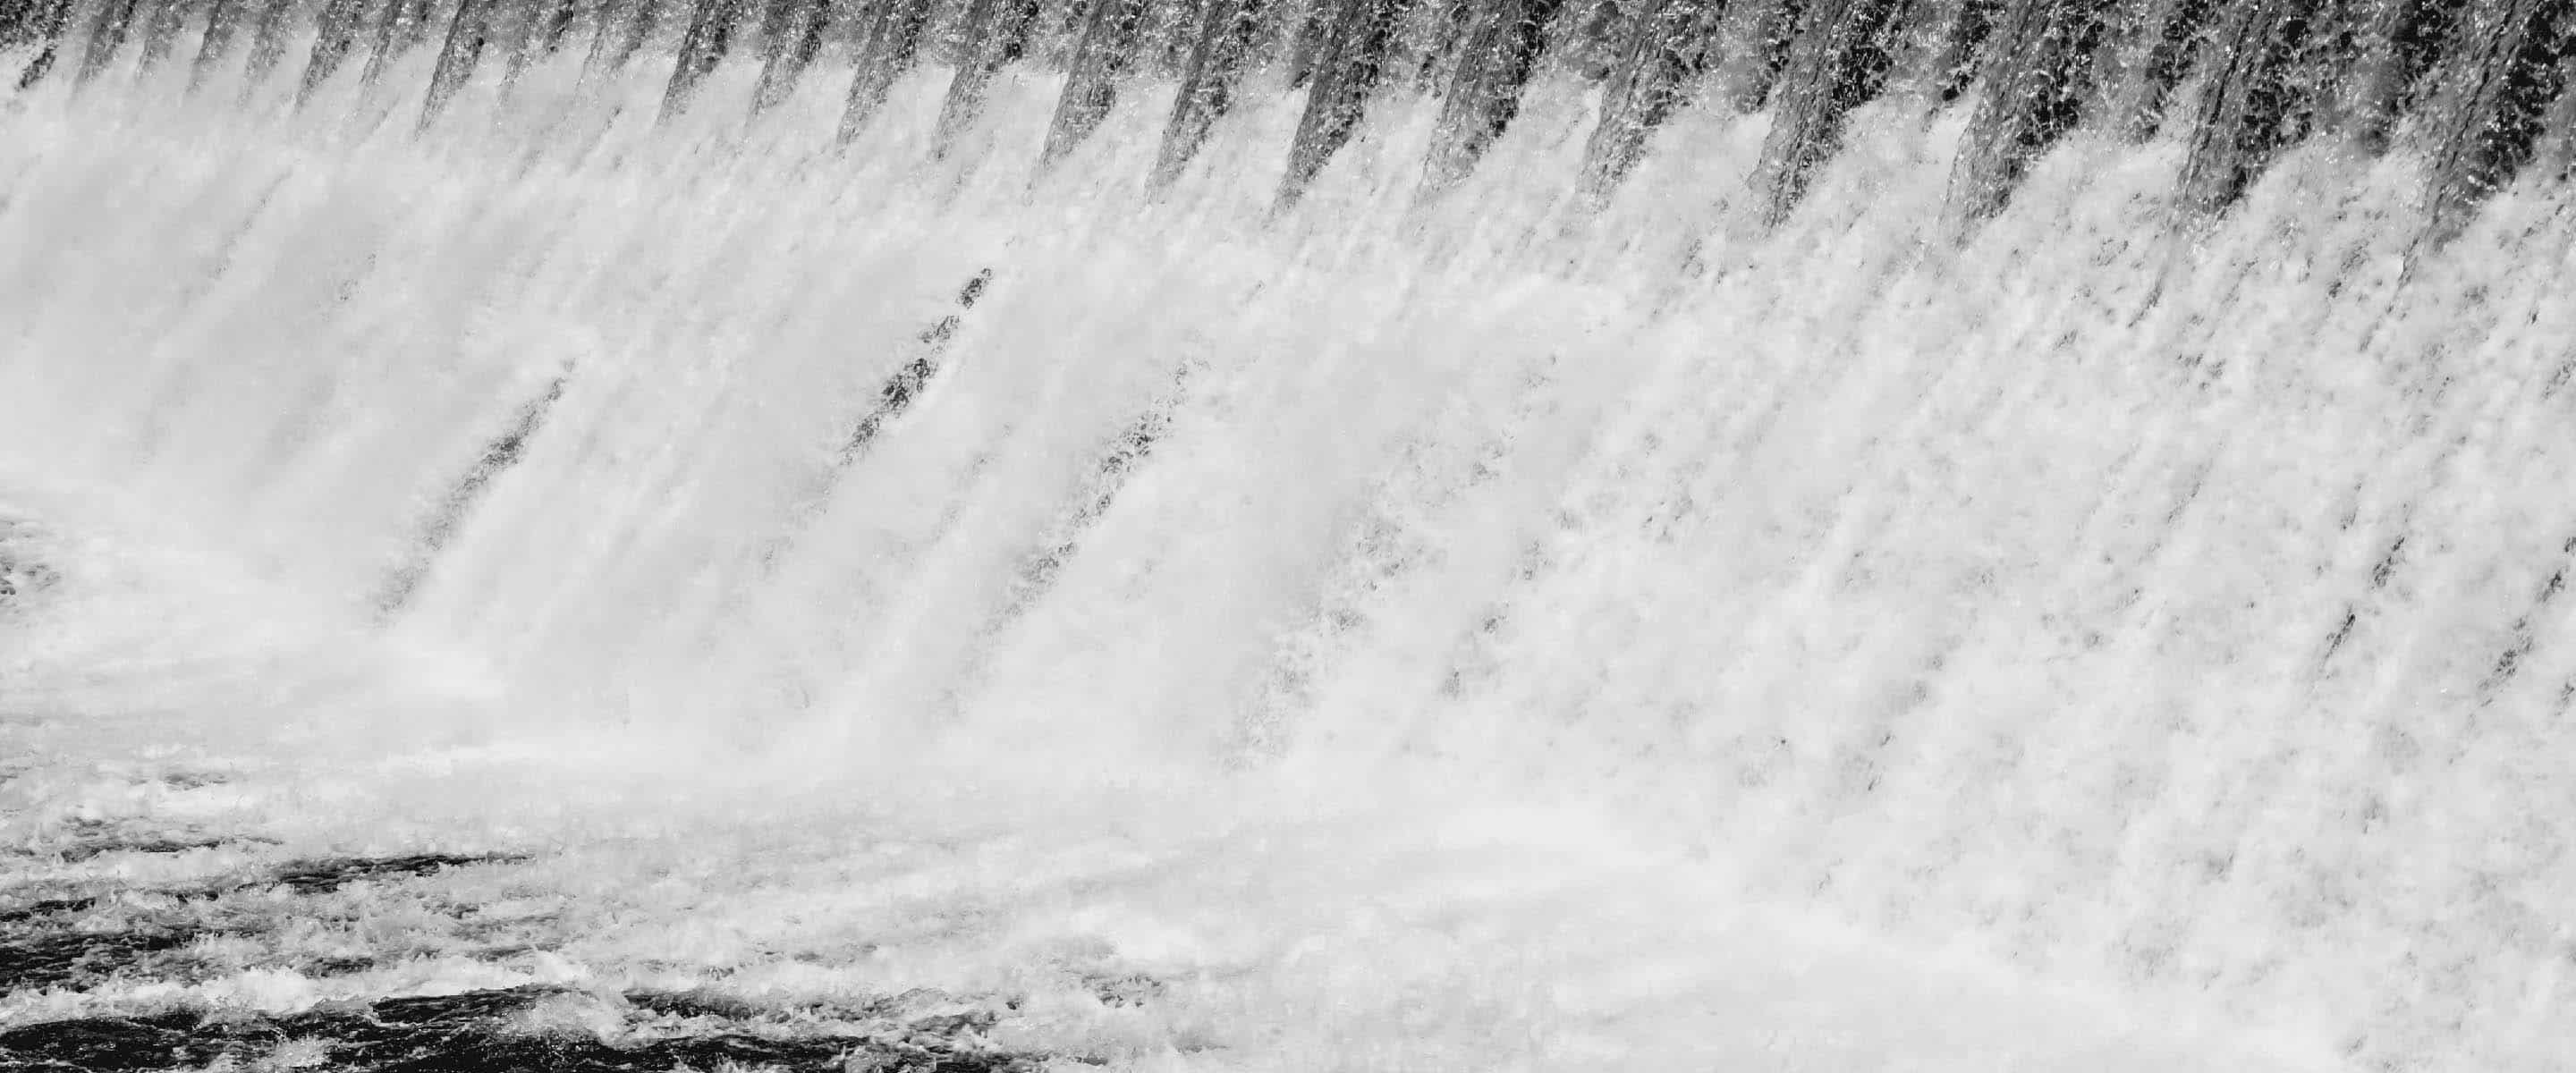 An image of water rushing through a dam.